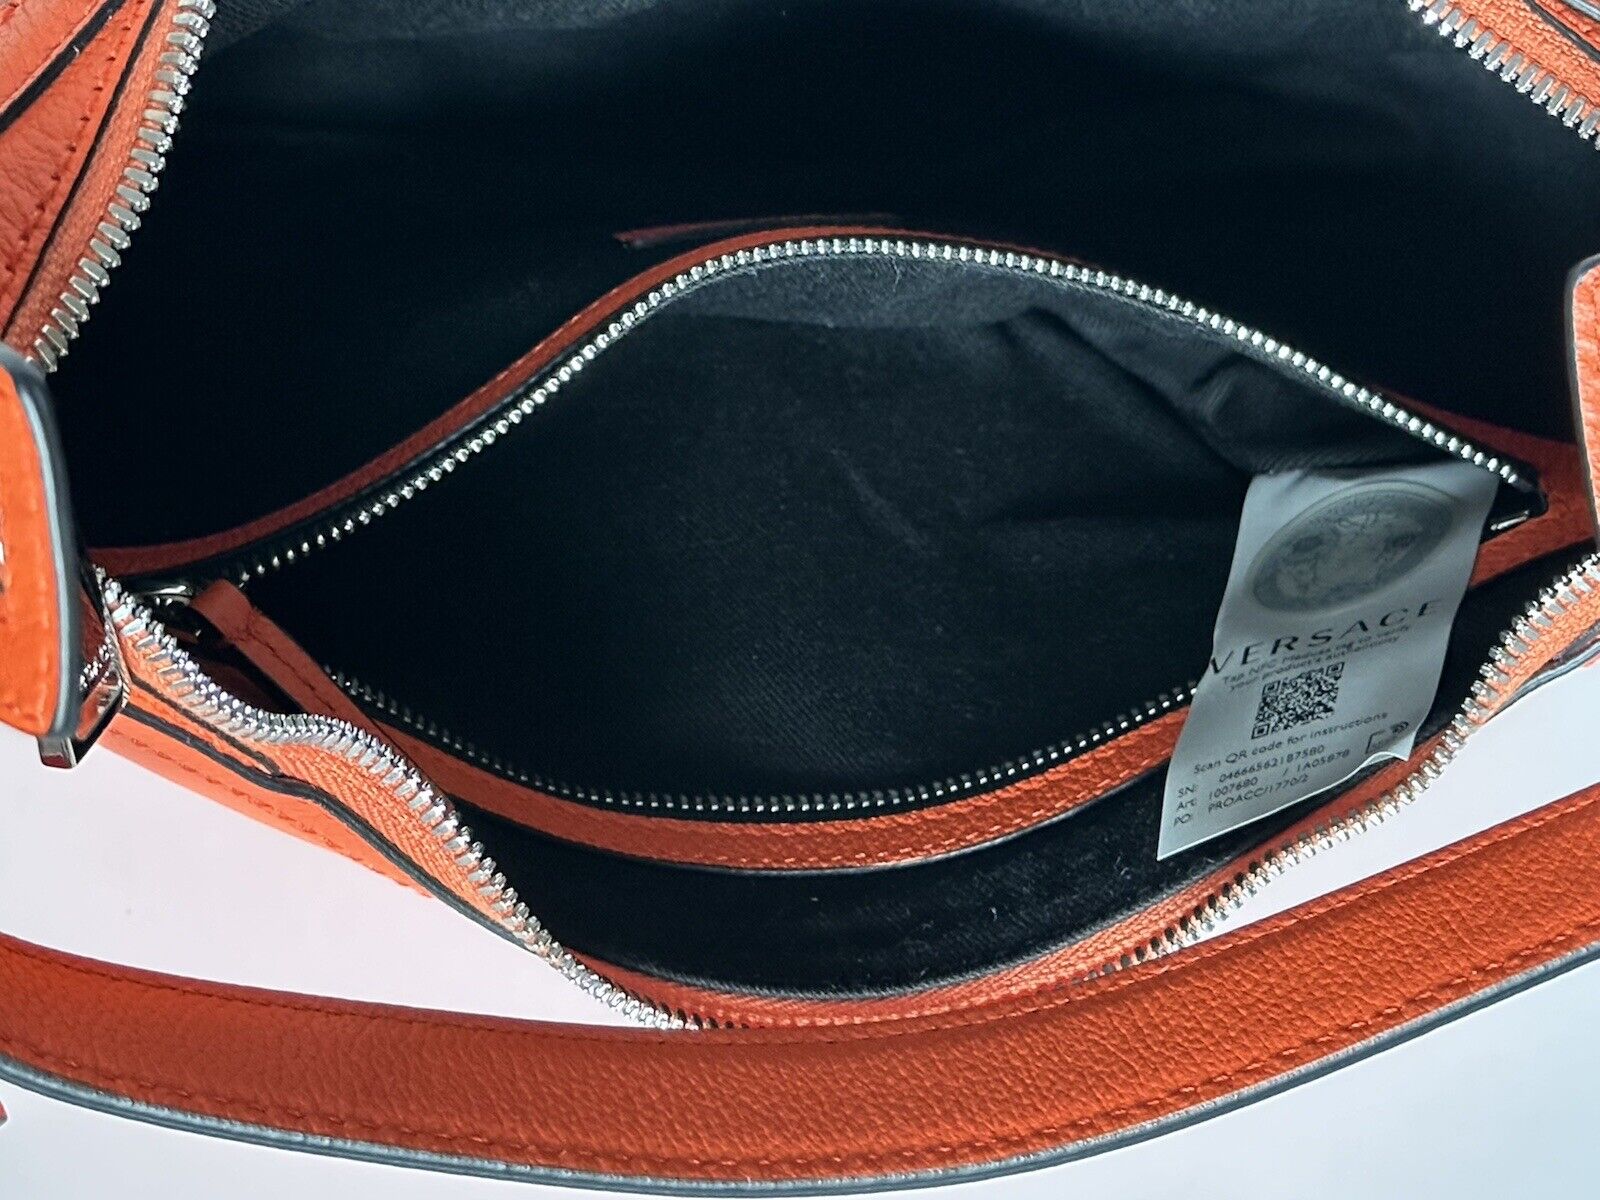 NWT $1925 Versace Silver Medusa Head Calf Leather Small Orange Hobo Bag 1007680